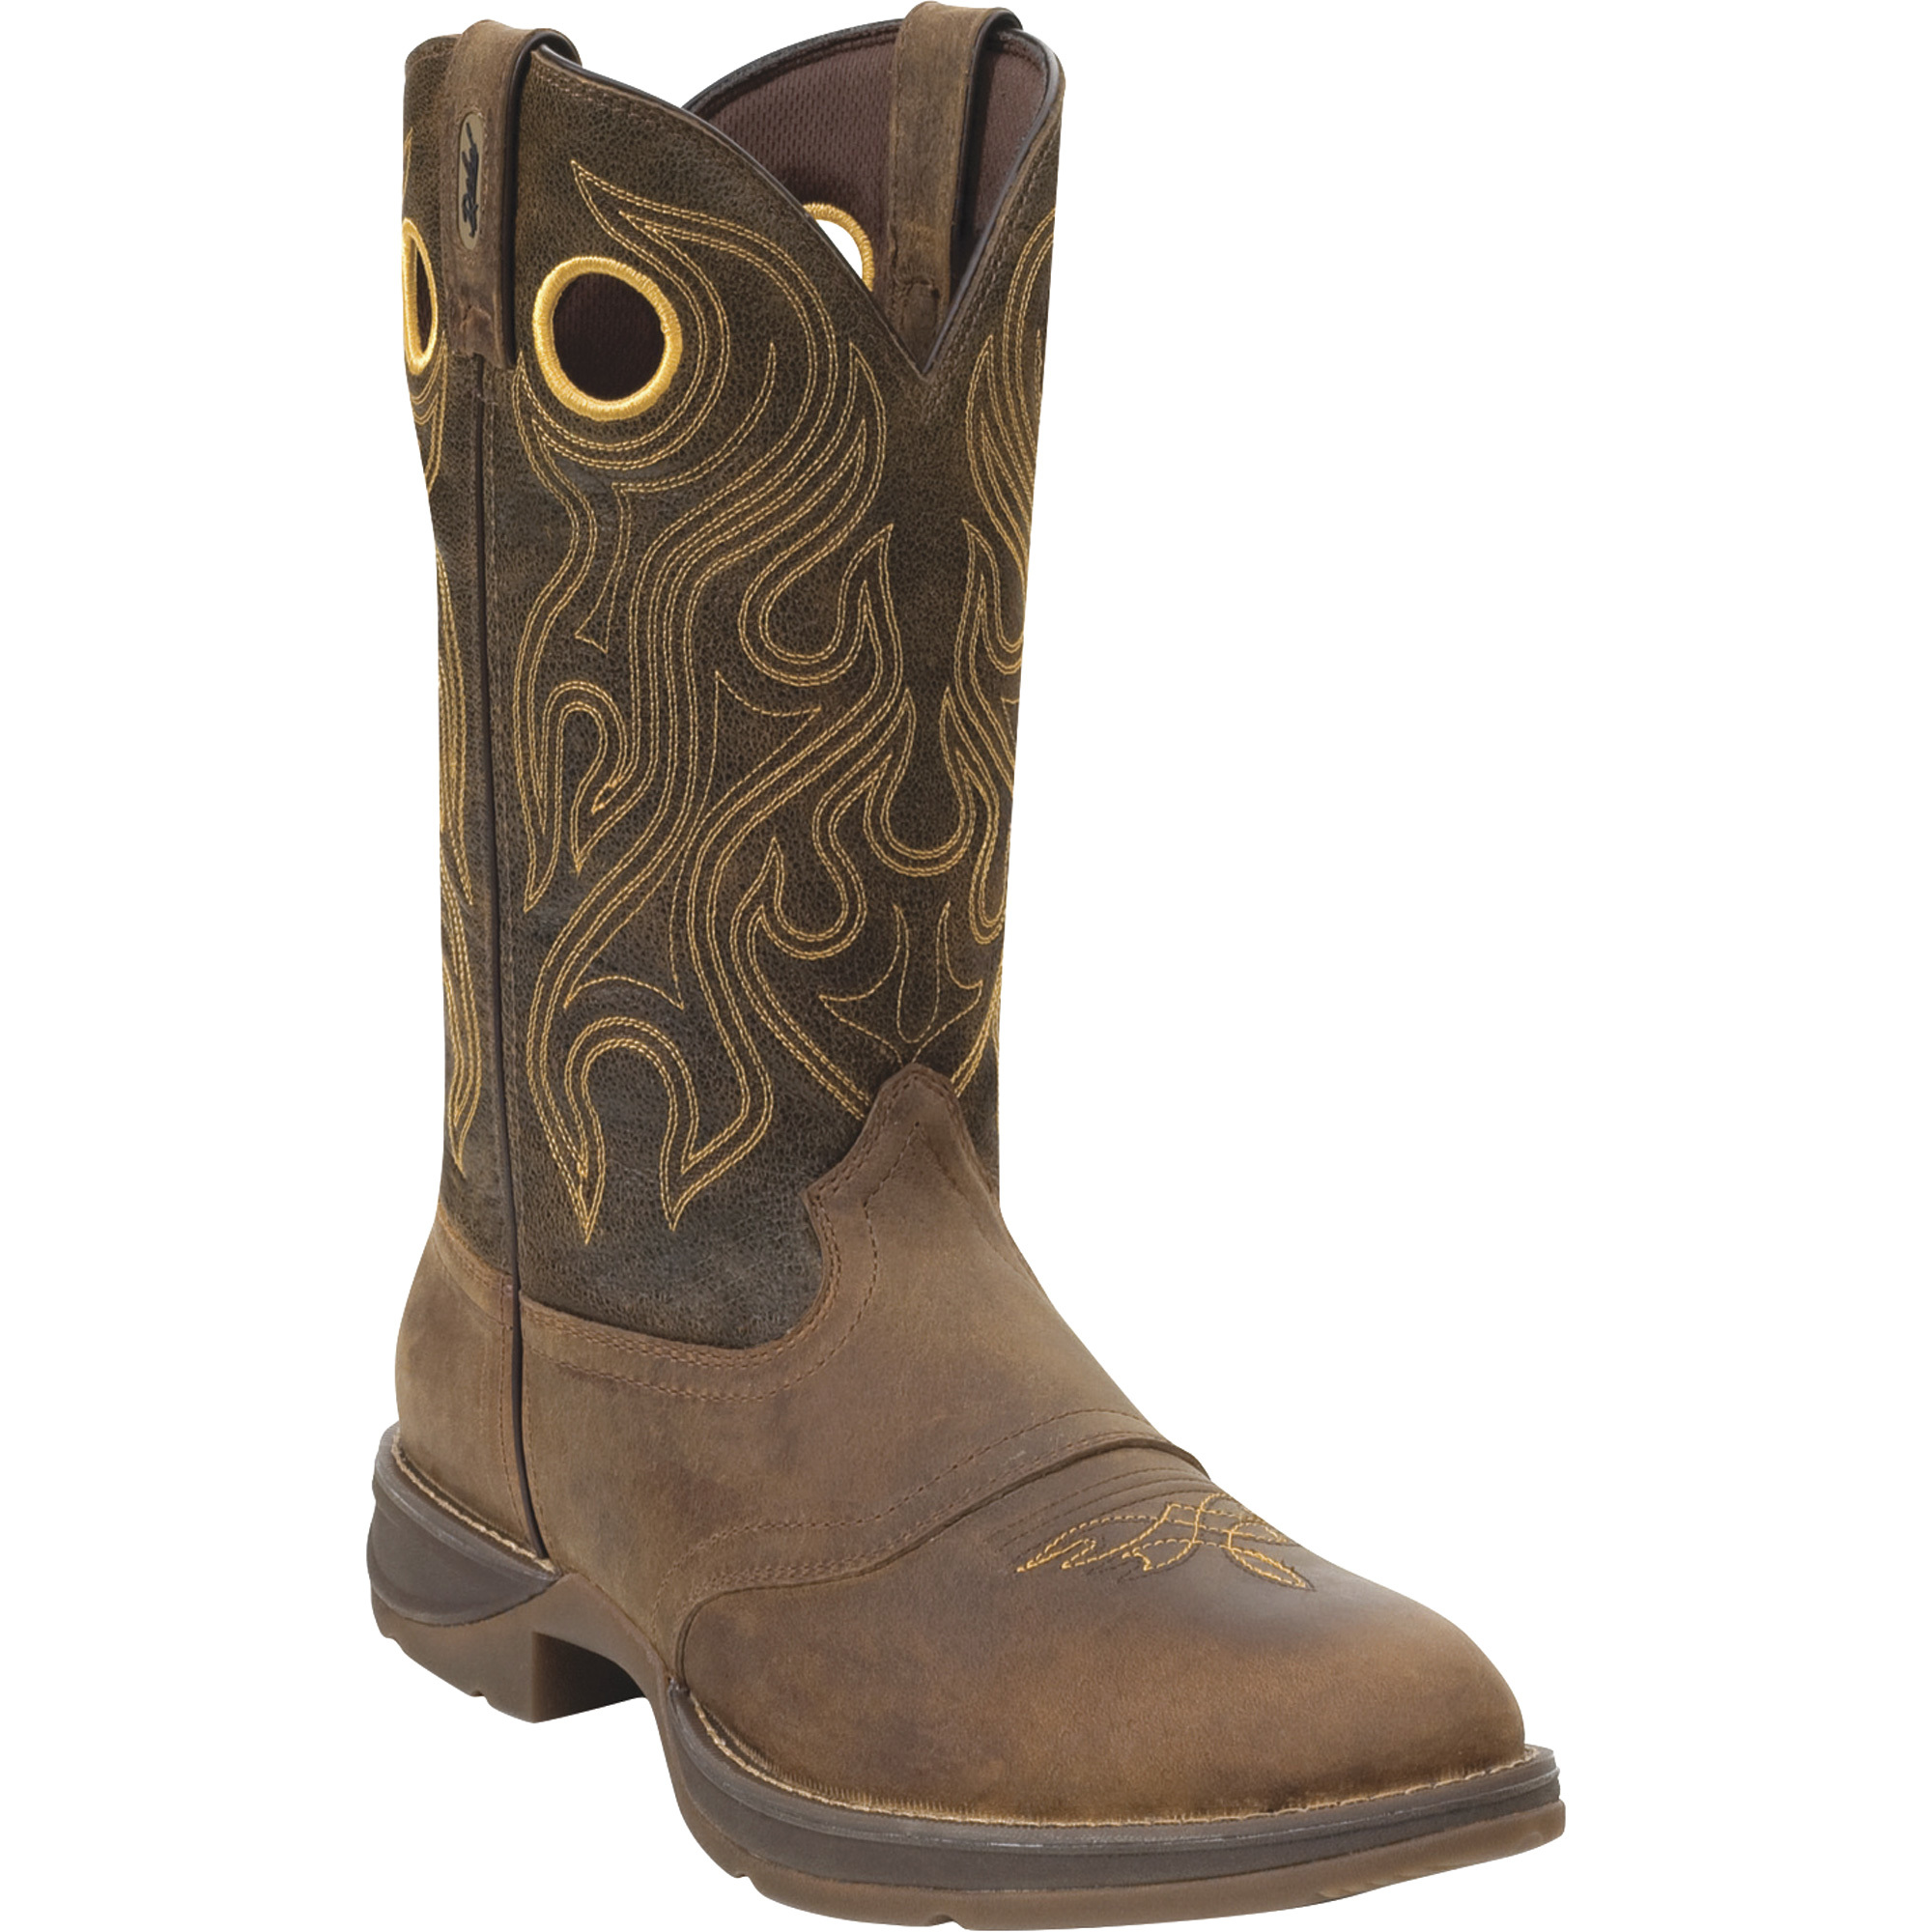 Durango Men's Rebel 12Inch Saddle Western Boot - Brown, Size 10 Wide, Model DB 5468